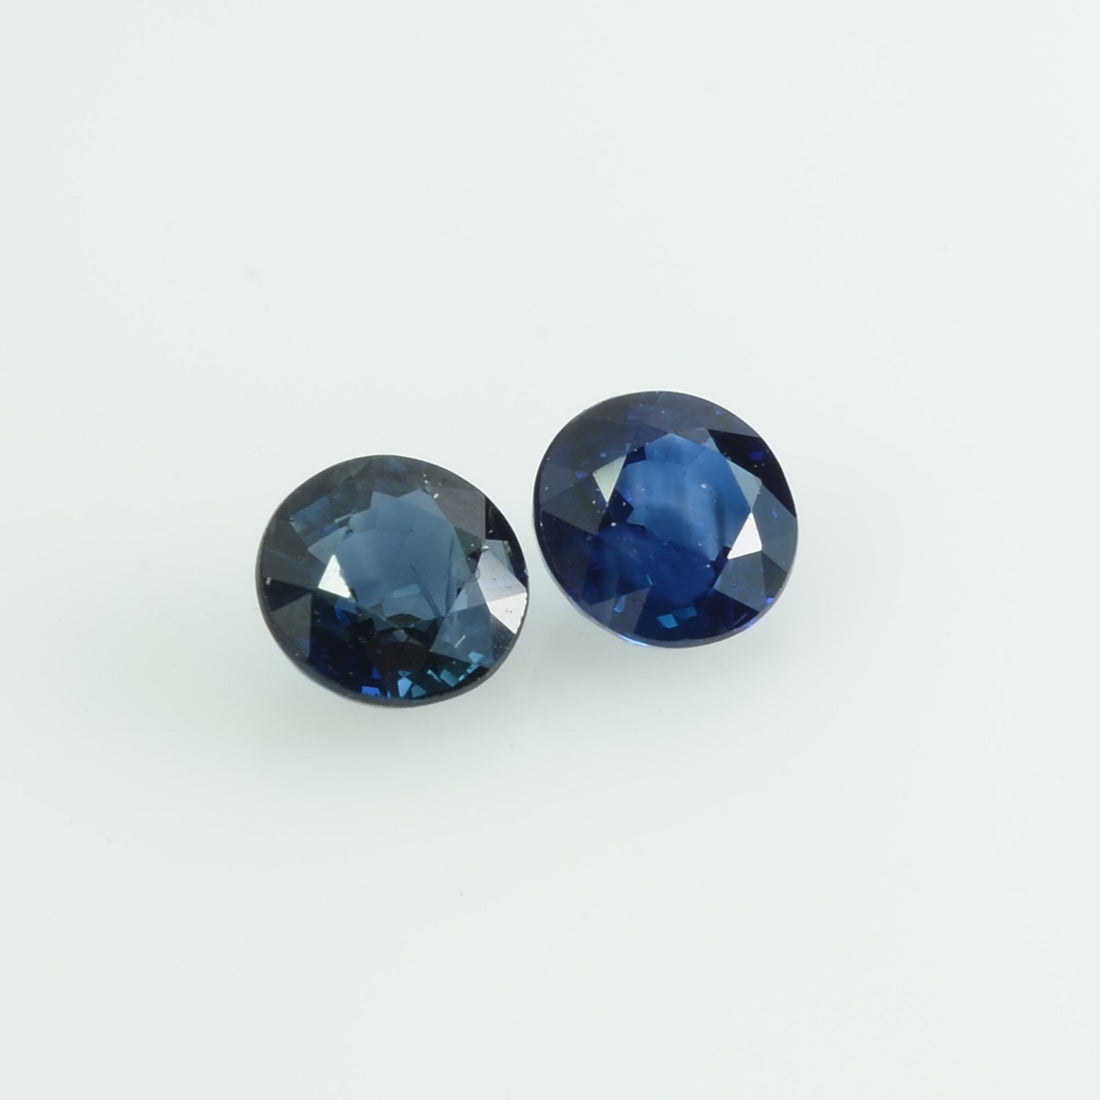 1.12 mm Natural Blue Sapphire Loose Gemstone Round Cut